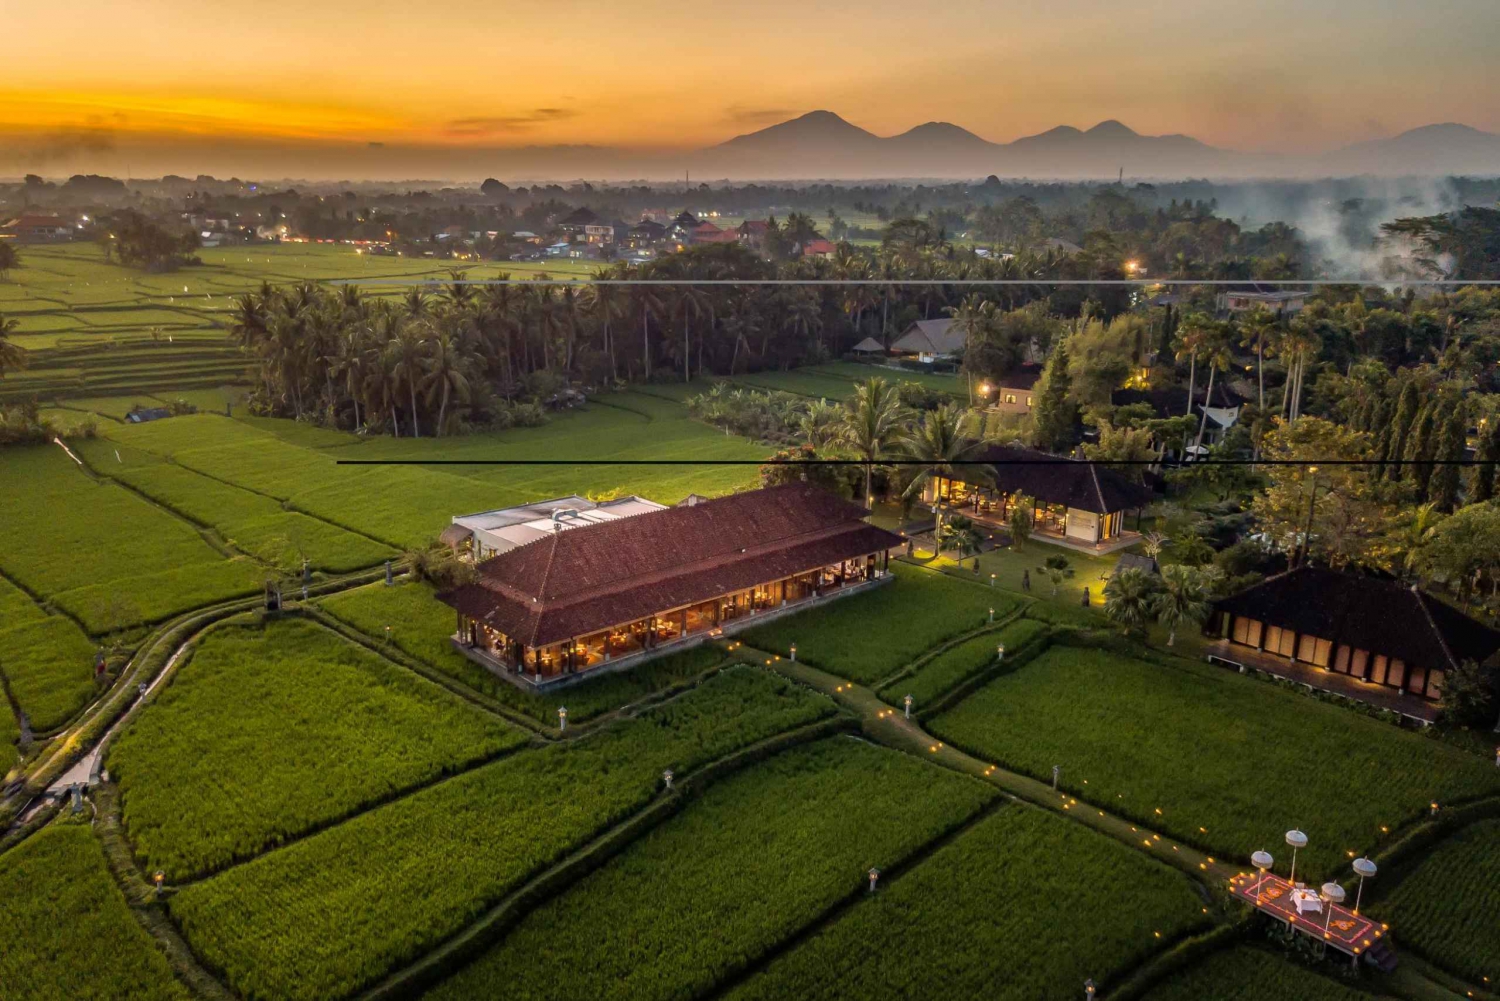 Ubud: Romantic Dinner among the Rice Fields